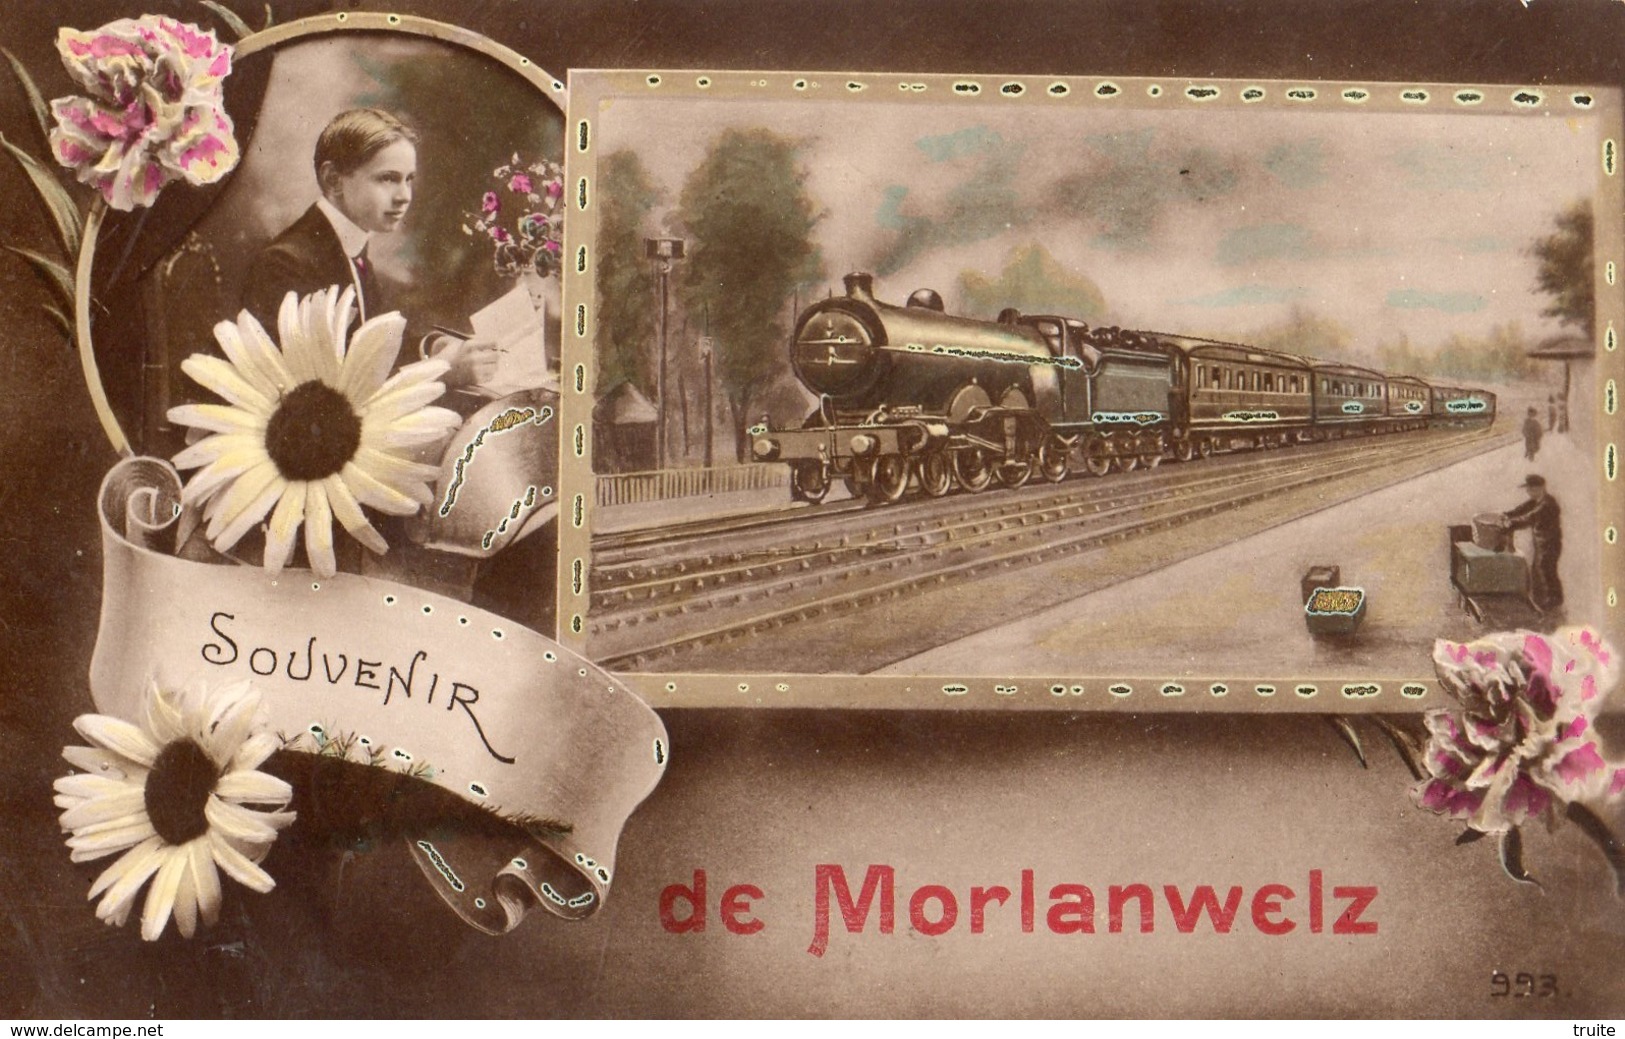 SOUVENIR DE MORLANWELZ - Morlanwelz